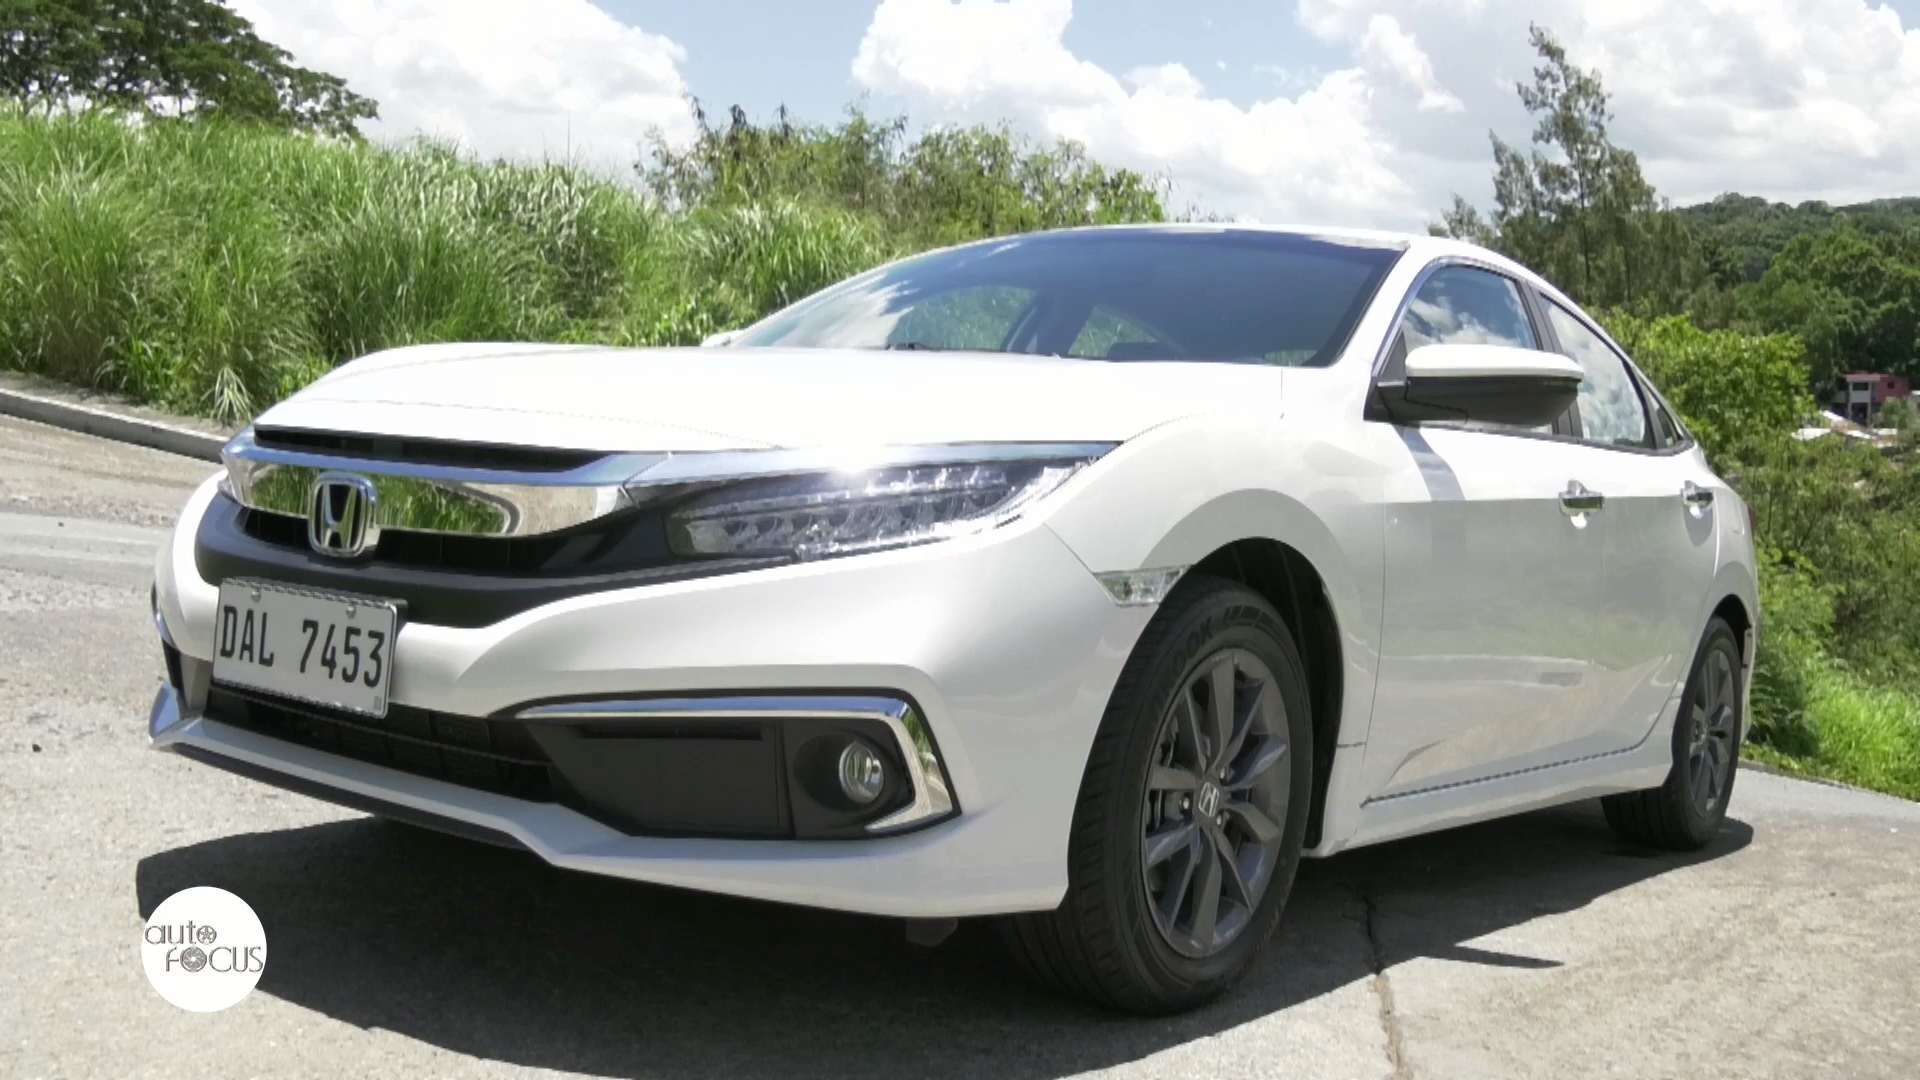 Production Models 2019 Honda Civic 1 8 E Cvt Review Auto